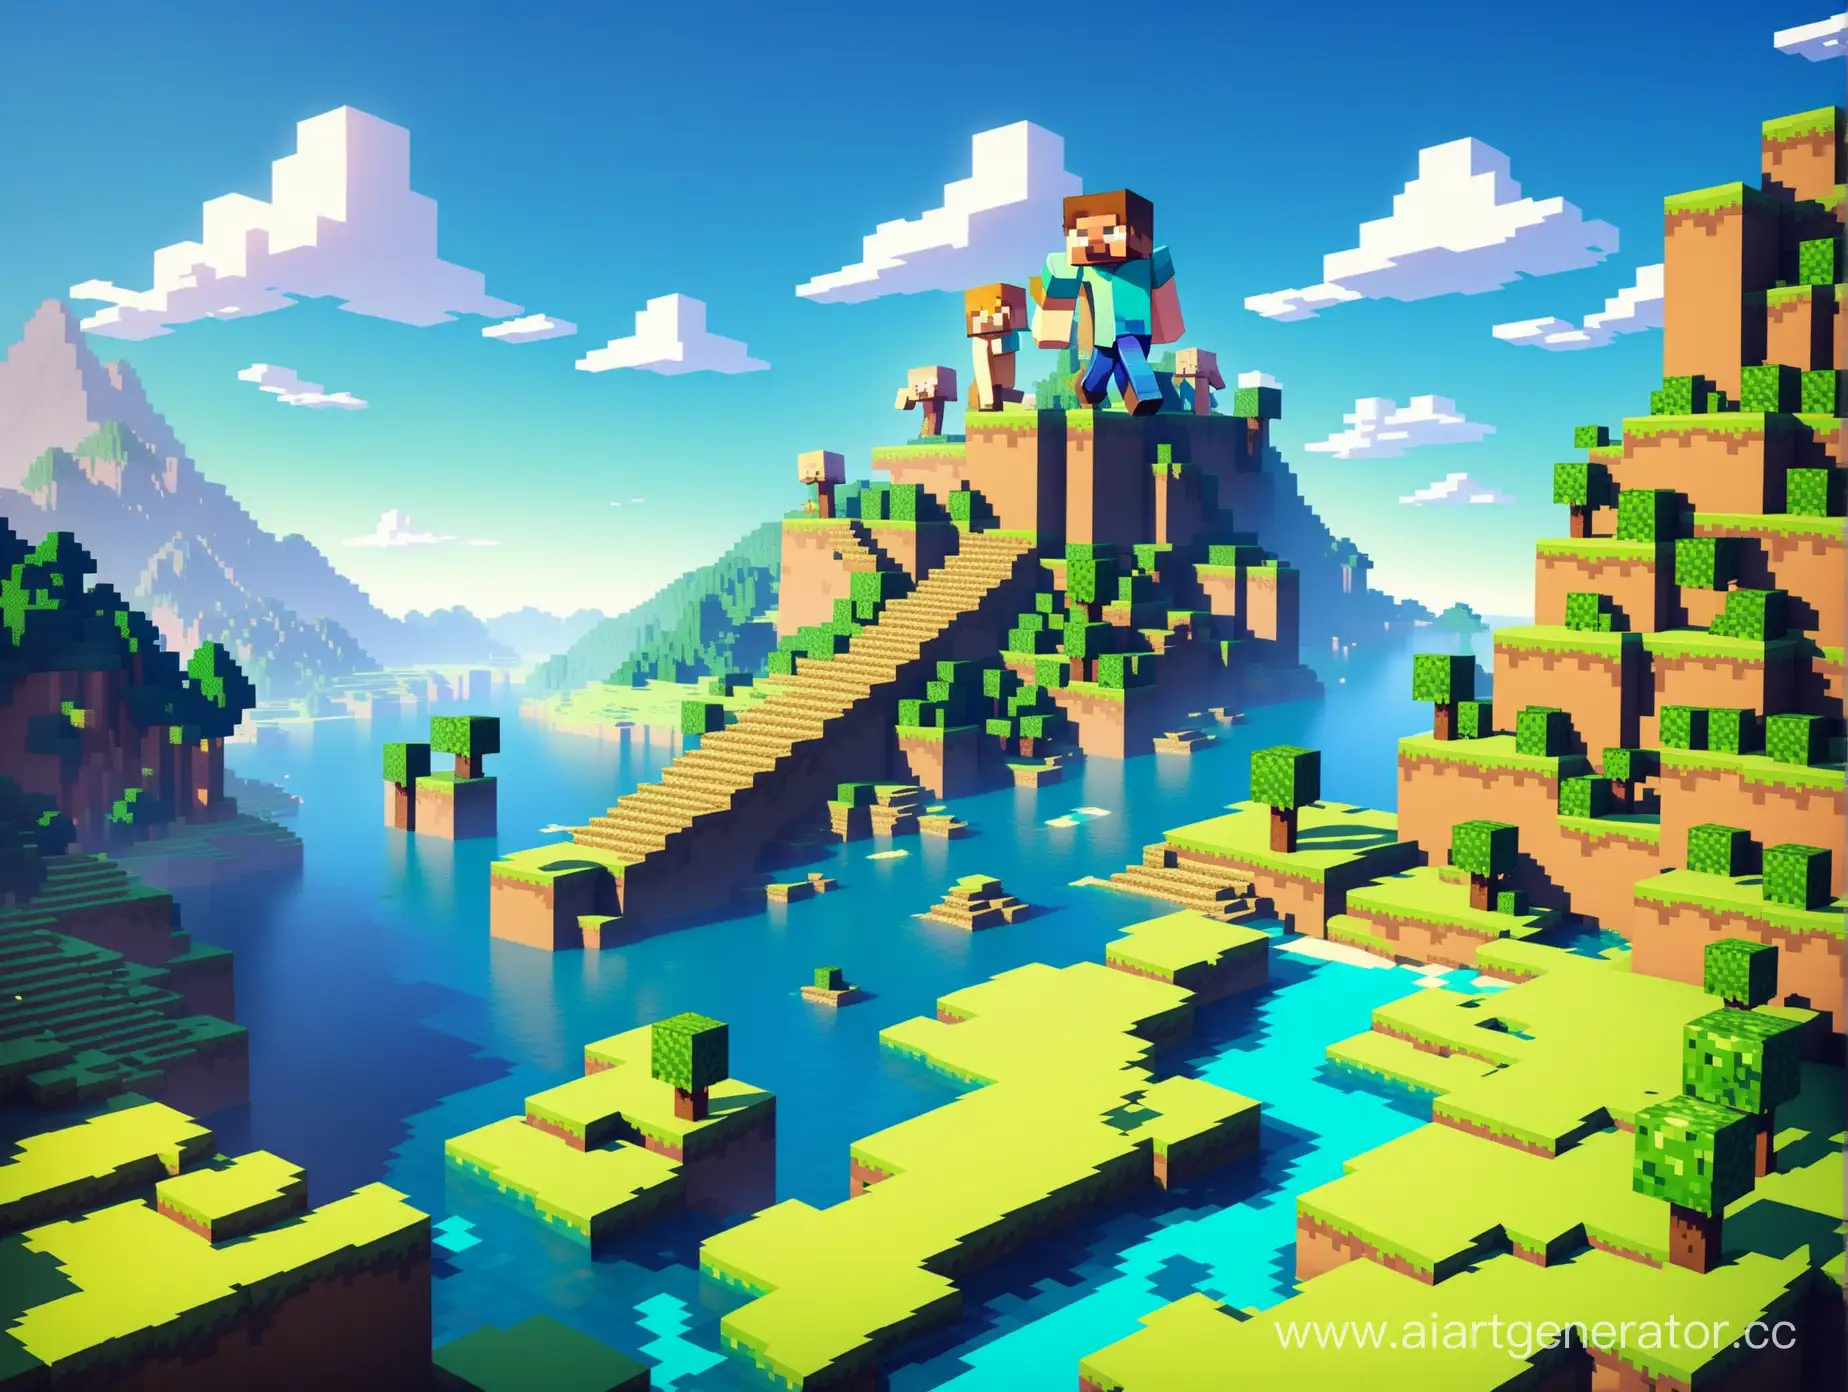 Vibrant-MinecraftInspired-Landscape-Explore-Pixelated-Wonders